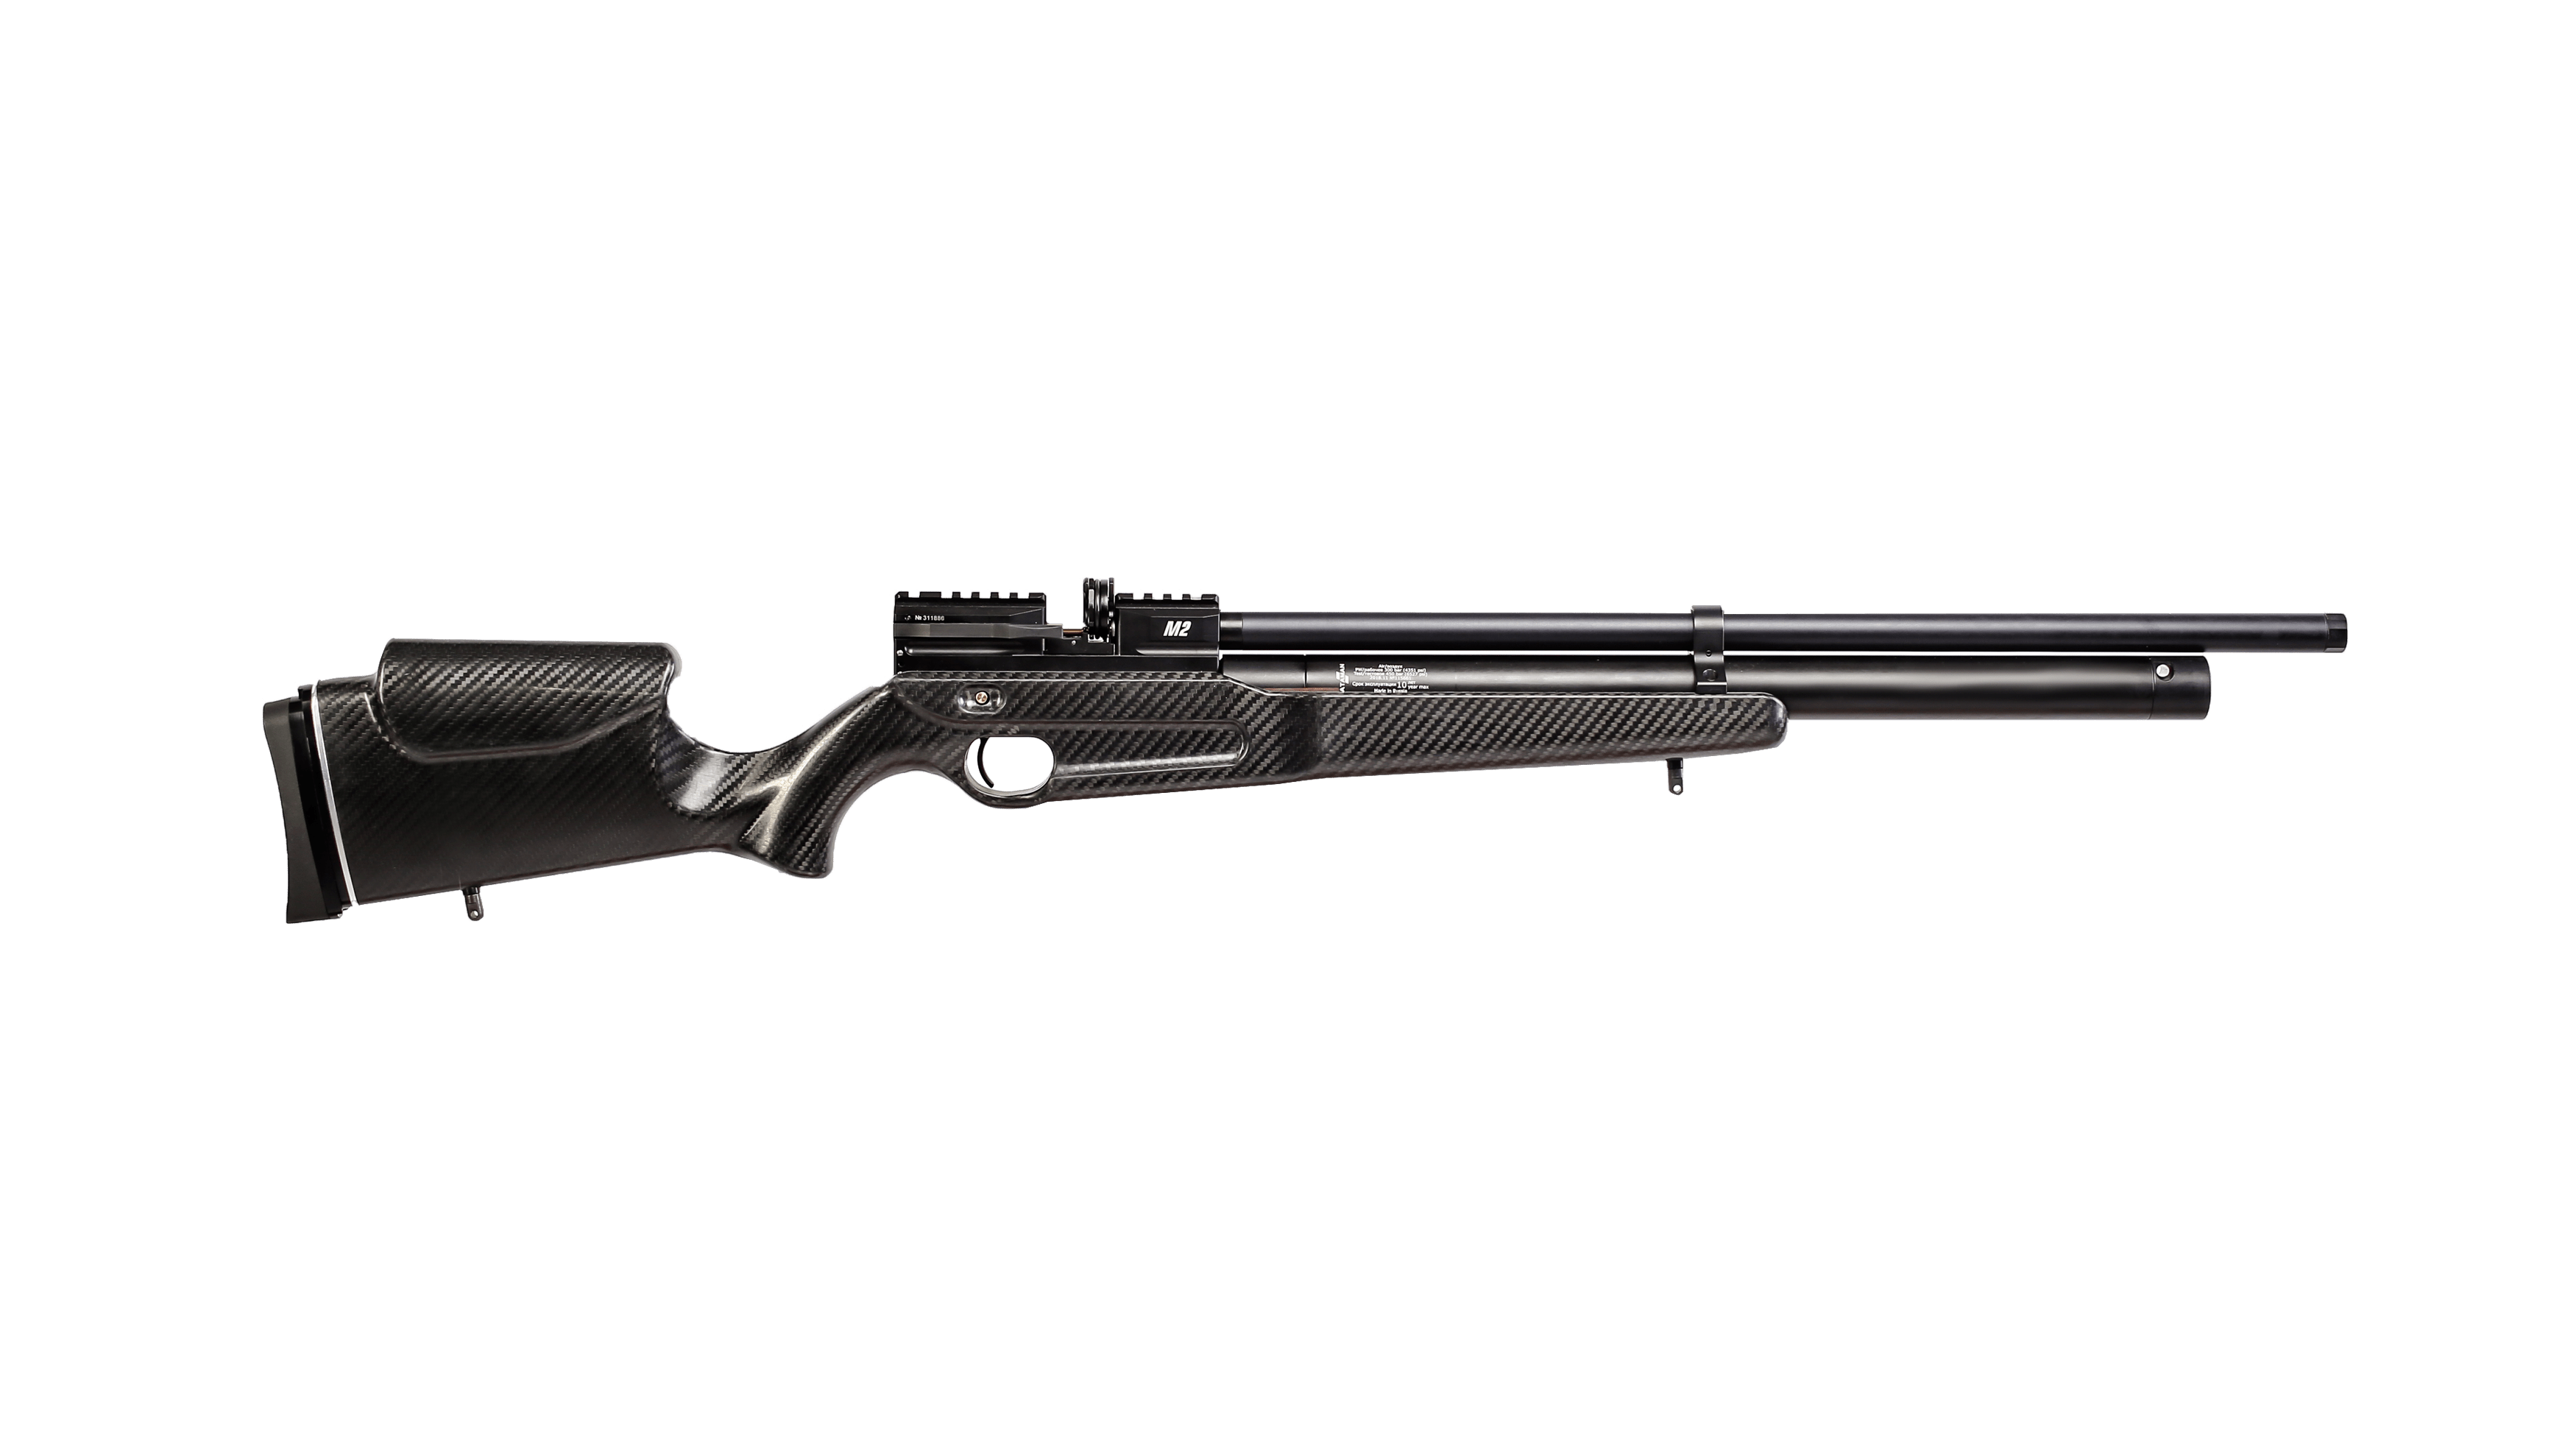 Пневматическая PCP винтовка ATAMAN M2R Карабин, кал.6,35мм (Carbon)